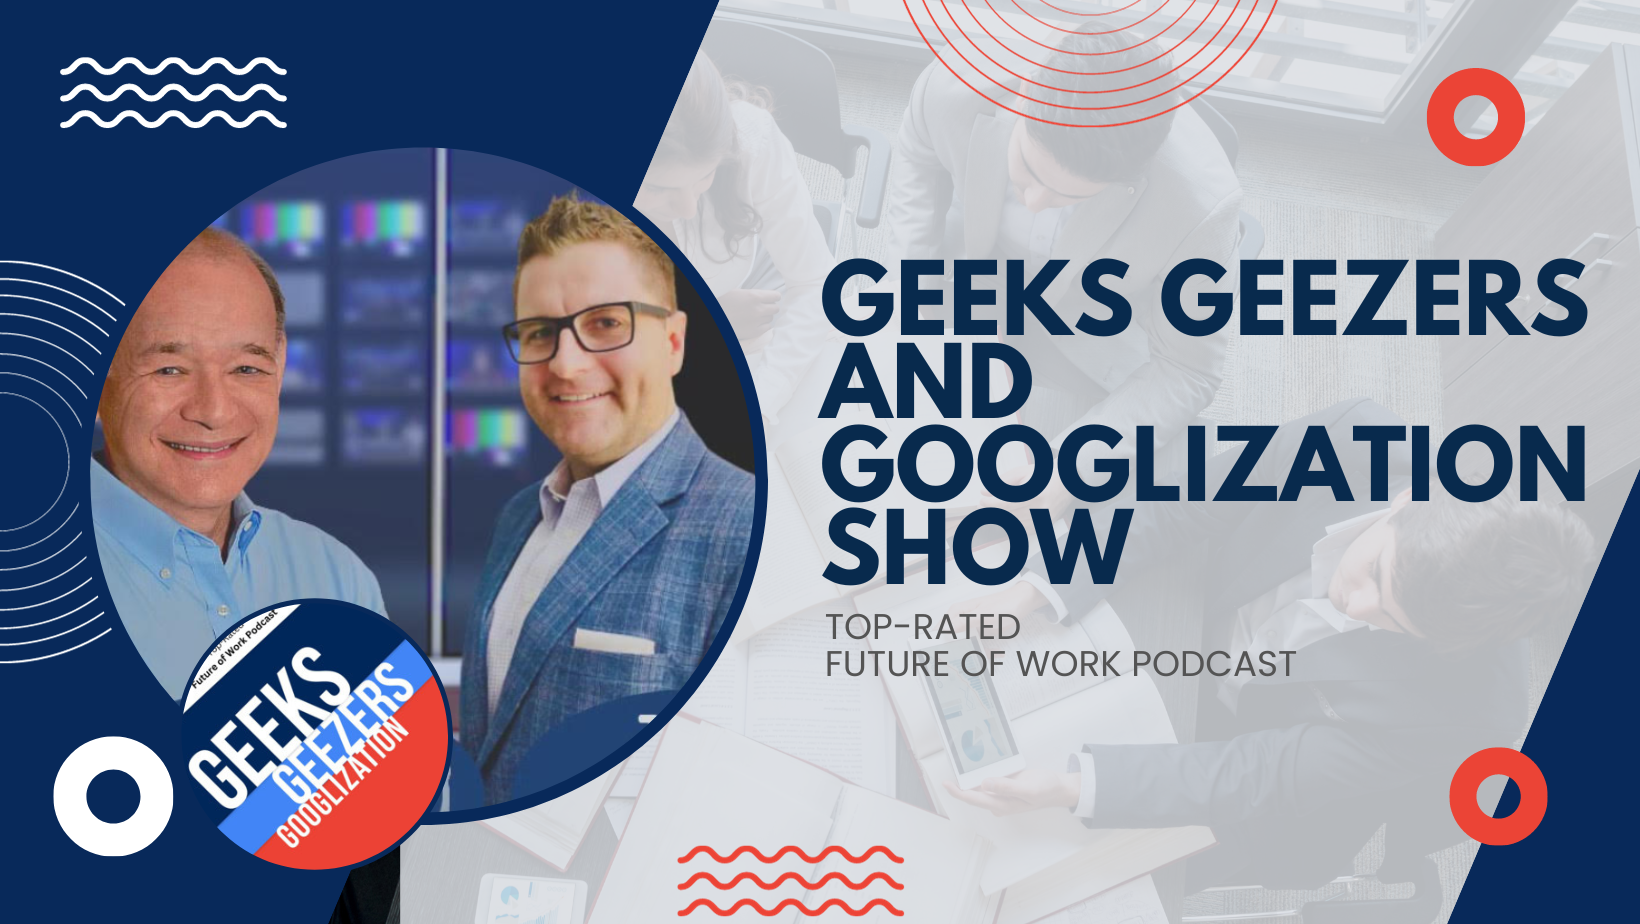 Geeks Geezers and Googlization Show – Listen Here